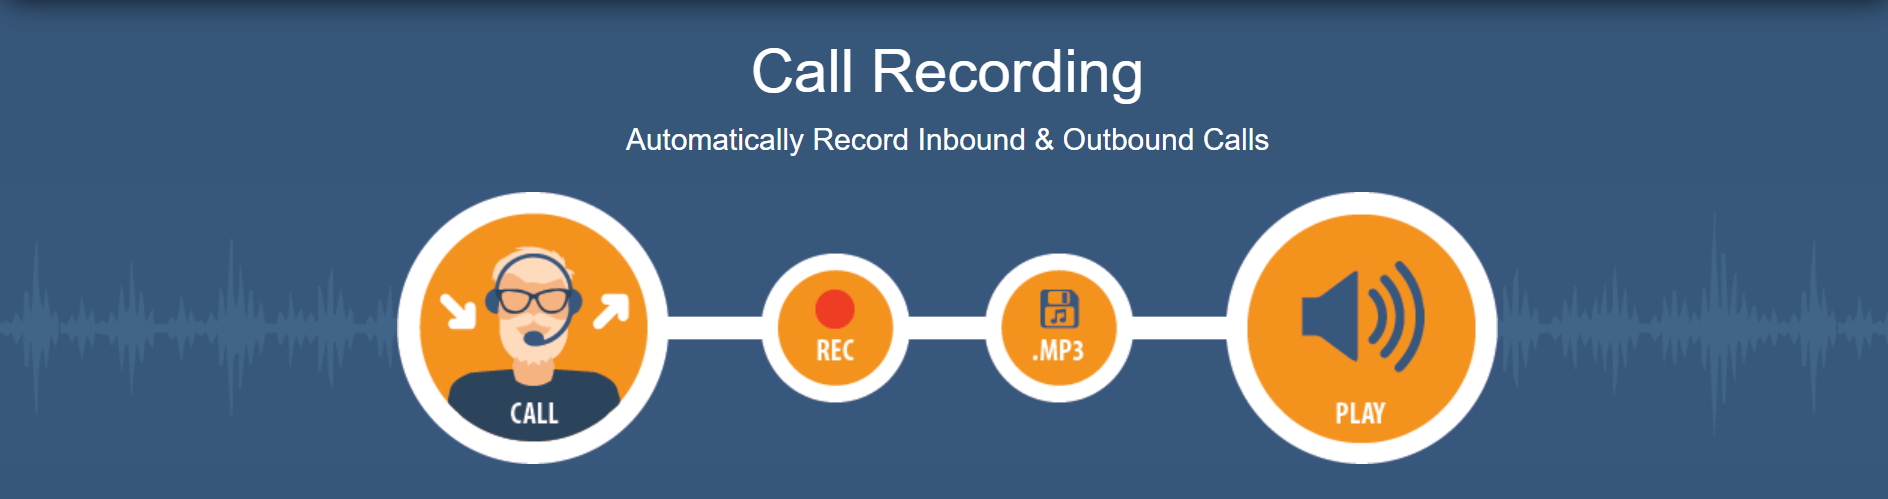 Call Recording Screenshot